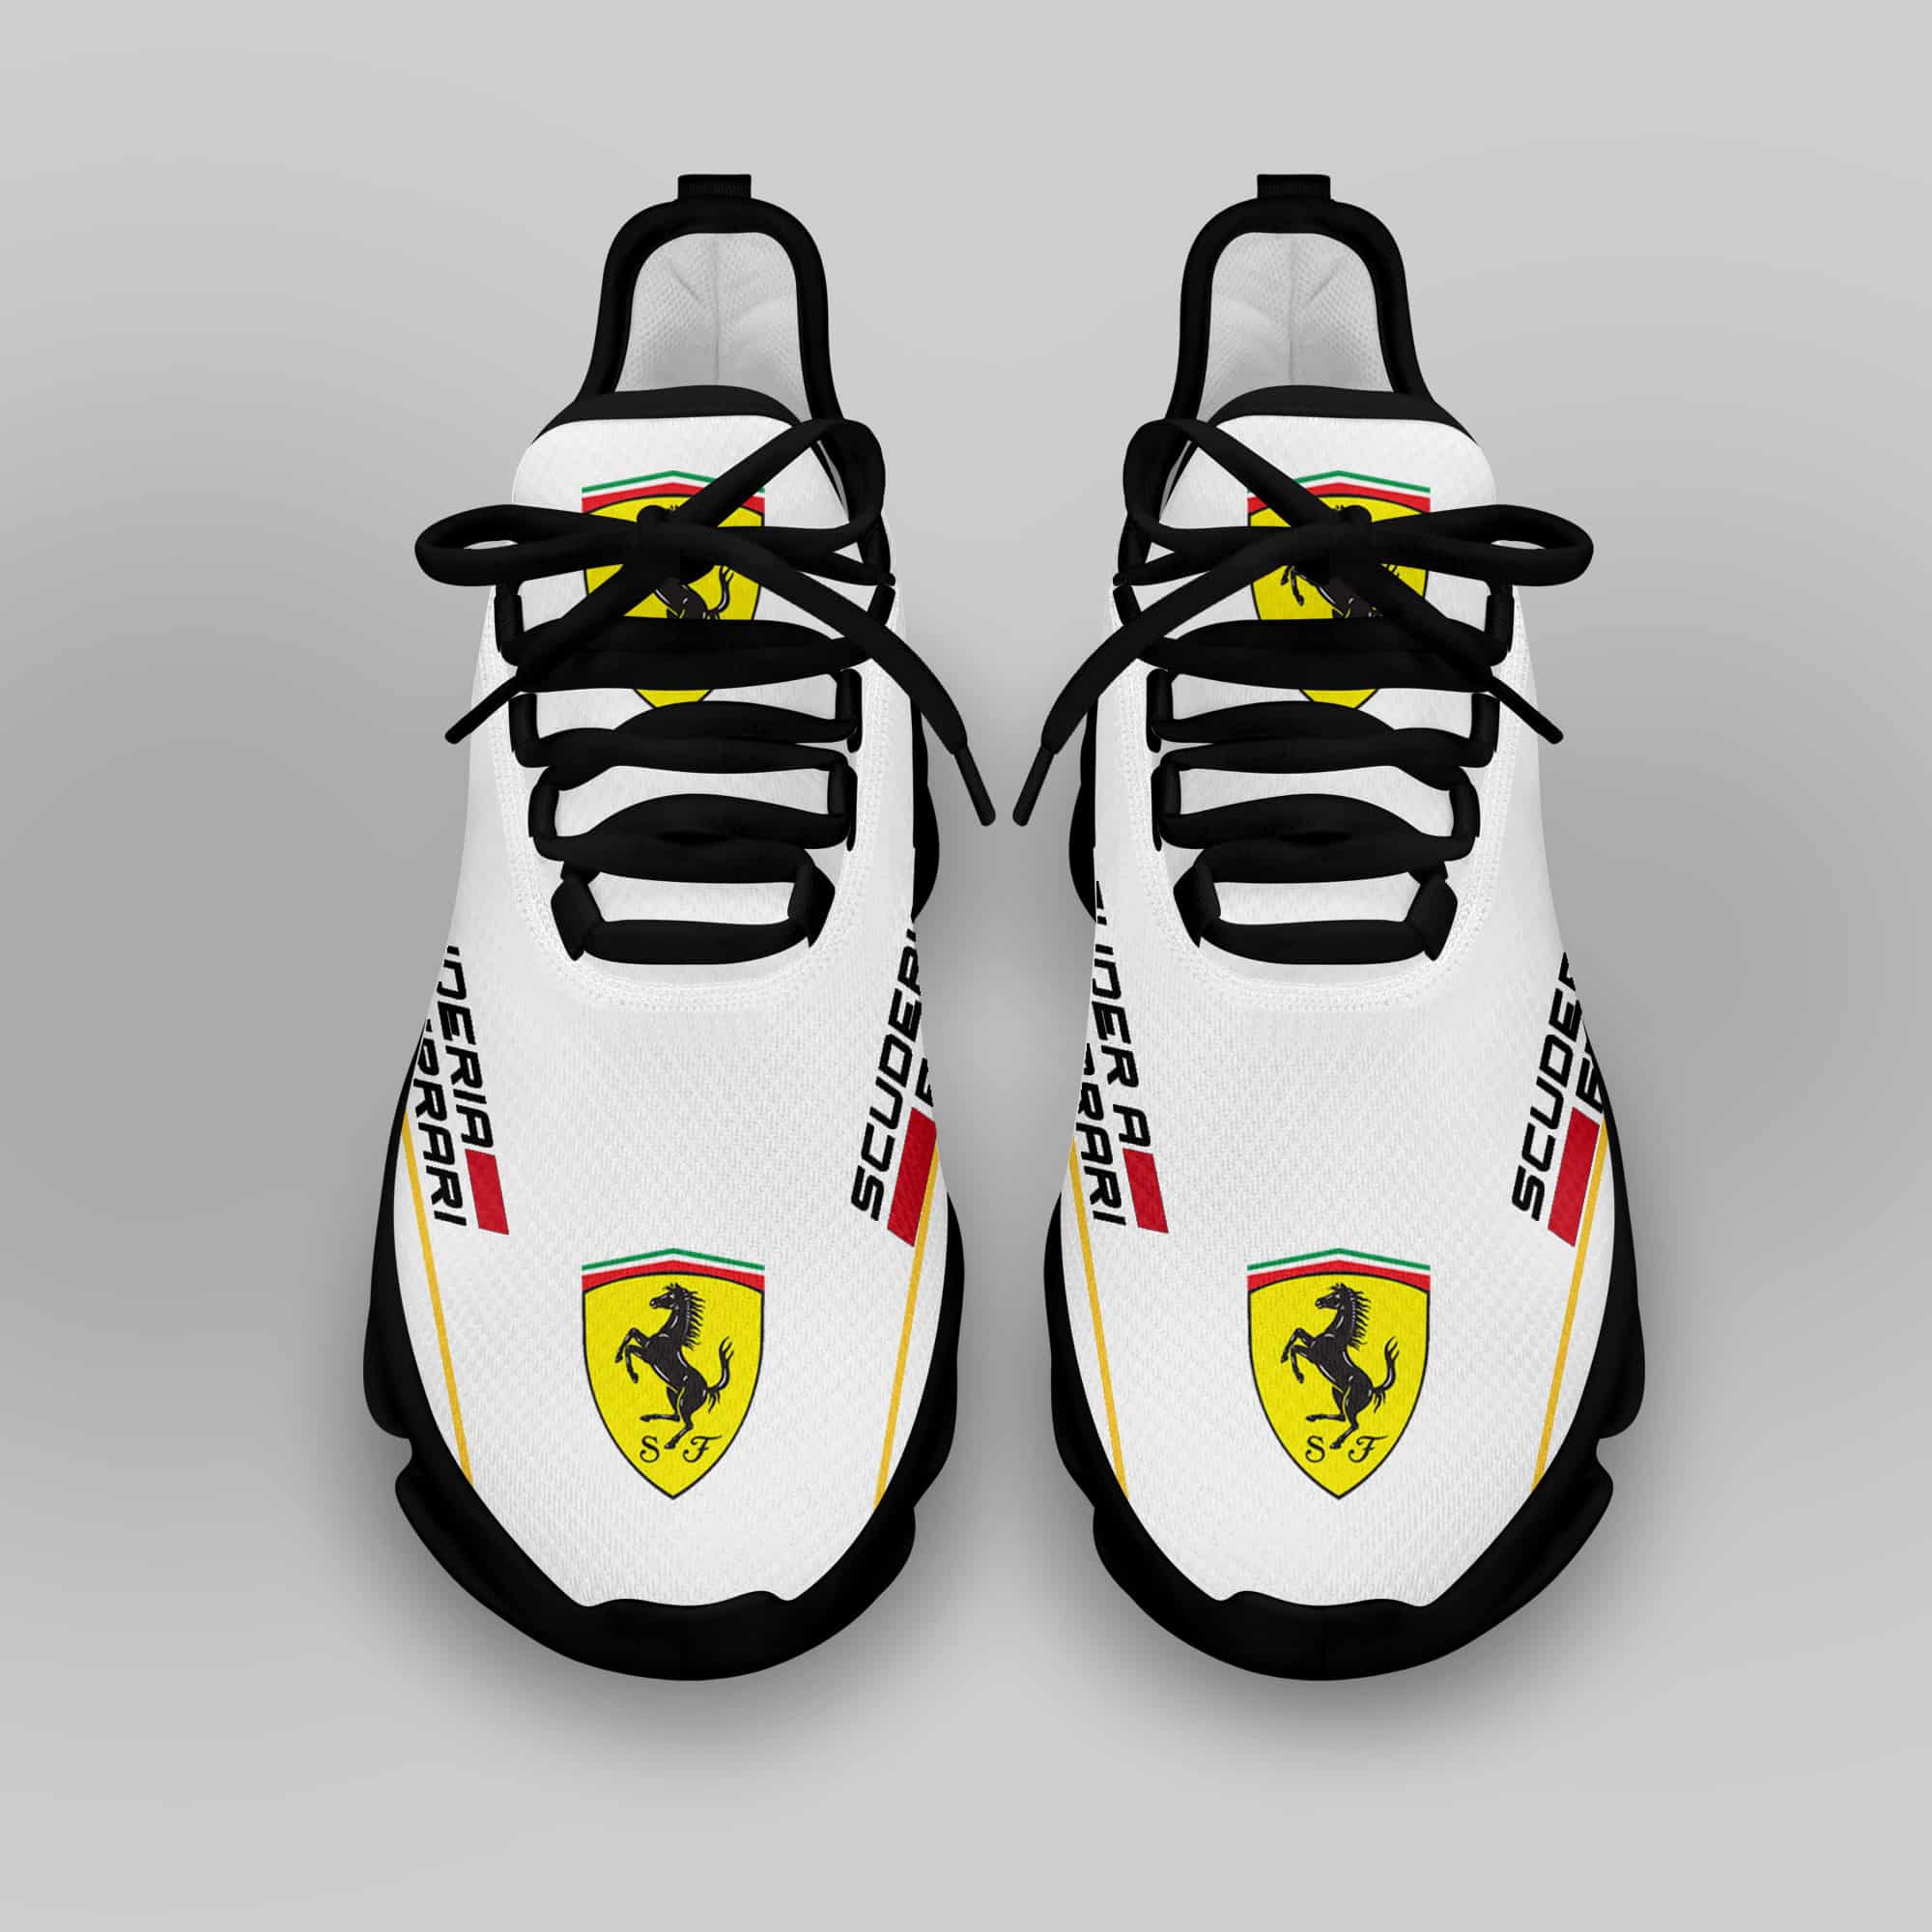 Ferrari Sneaker Running Shoes Max Soul Shoes Sneakers Ver 32 4